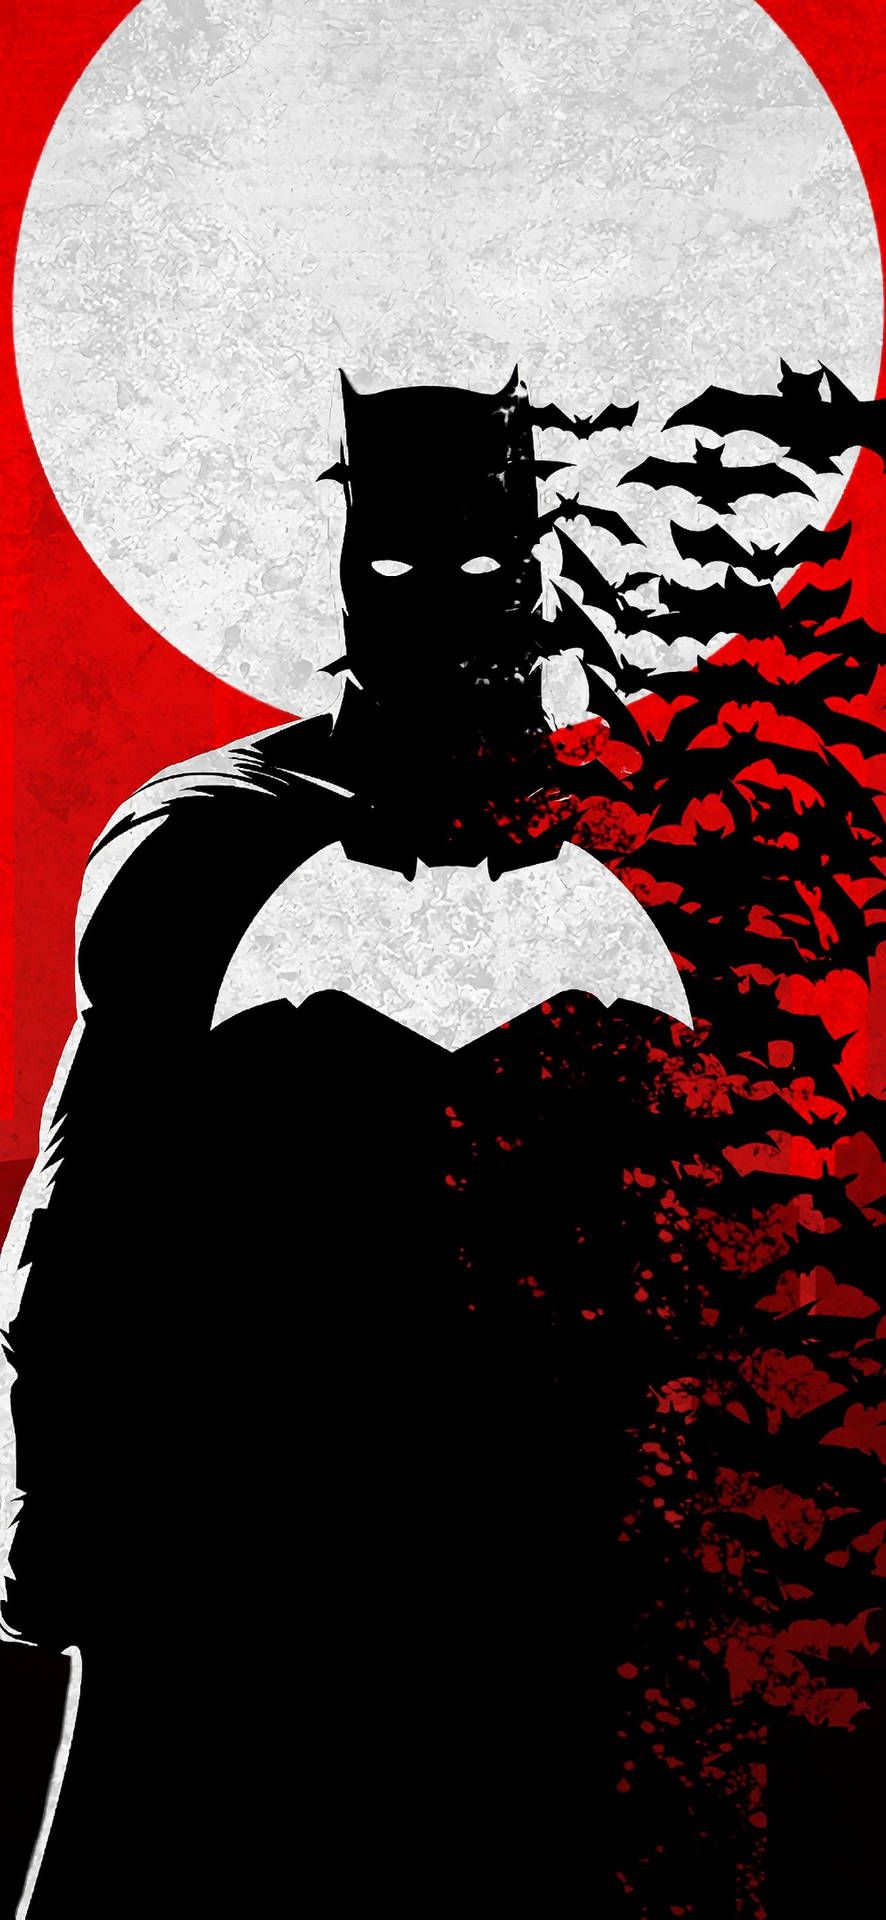 Free The Batman iPhone Wallpaper Downloads, The Batman iPhone Wallpaper for FREE